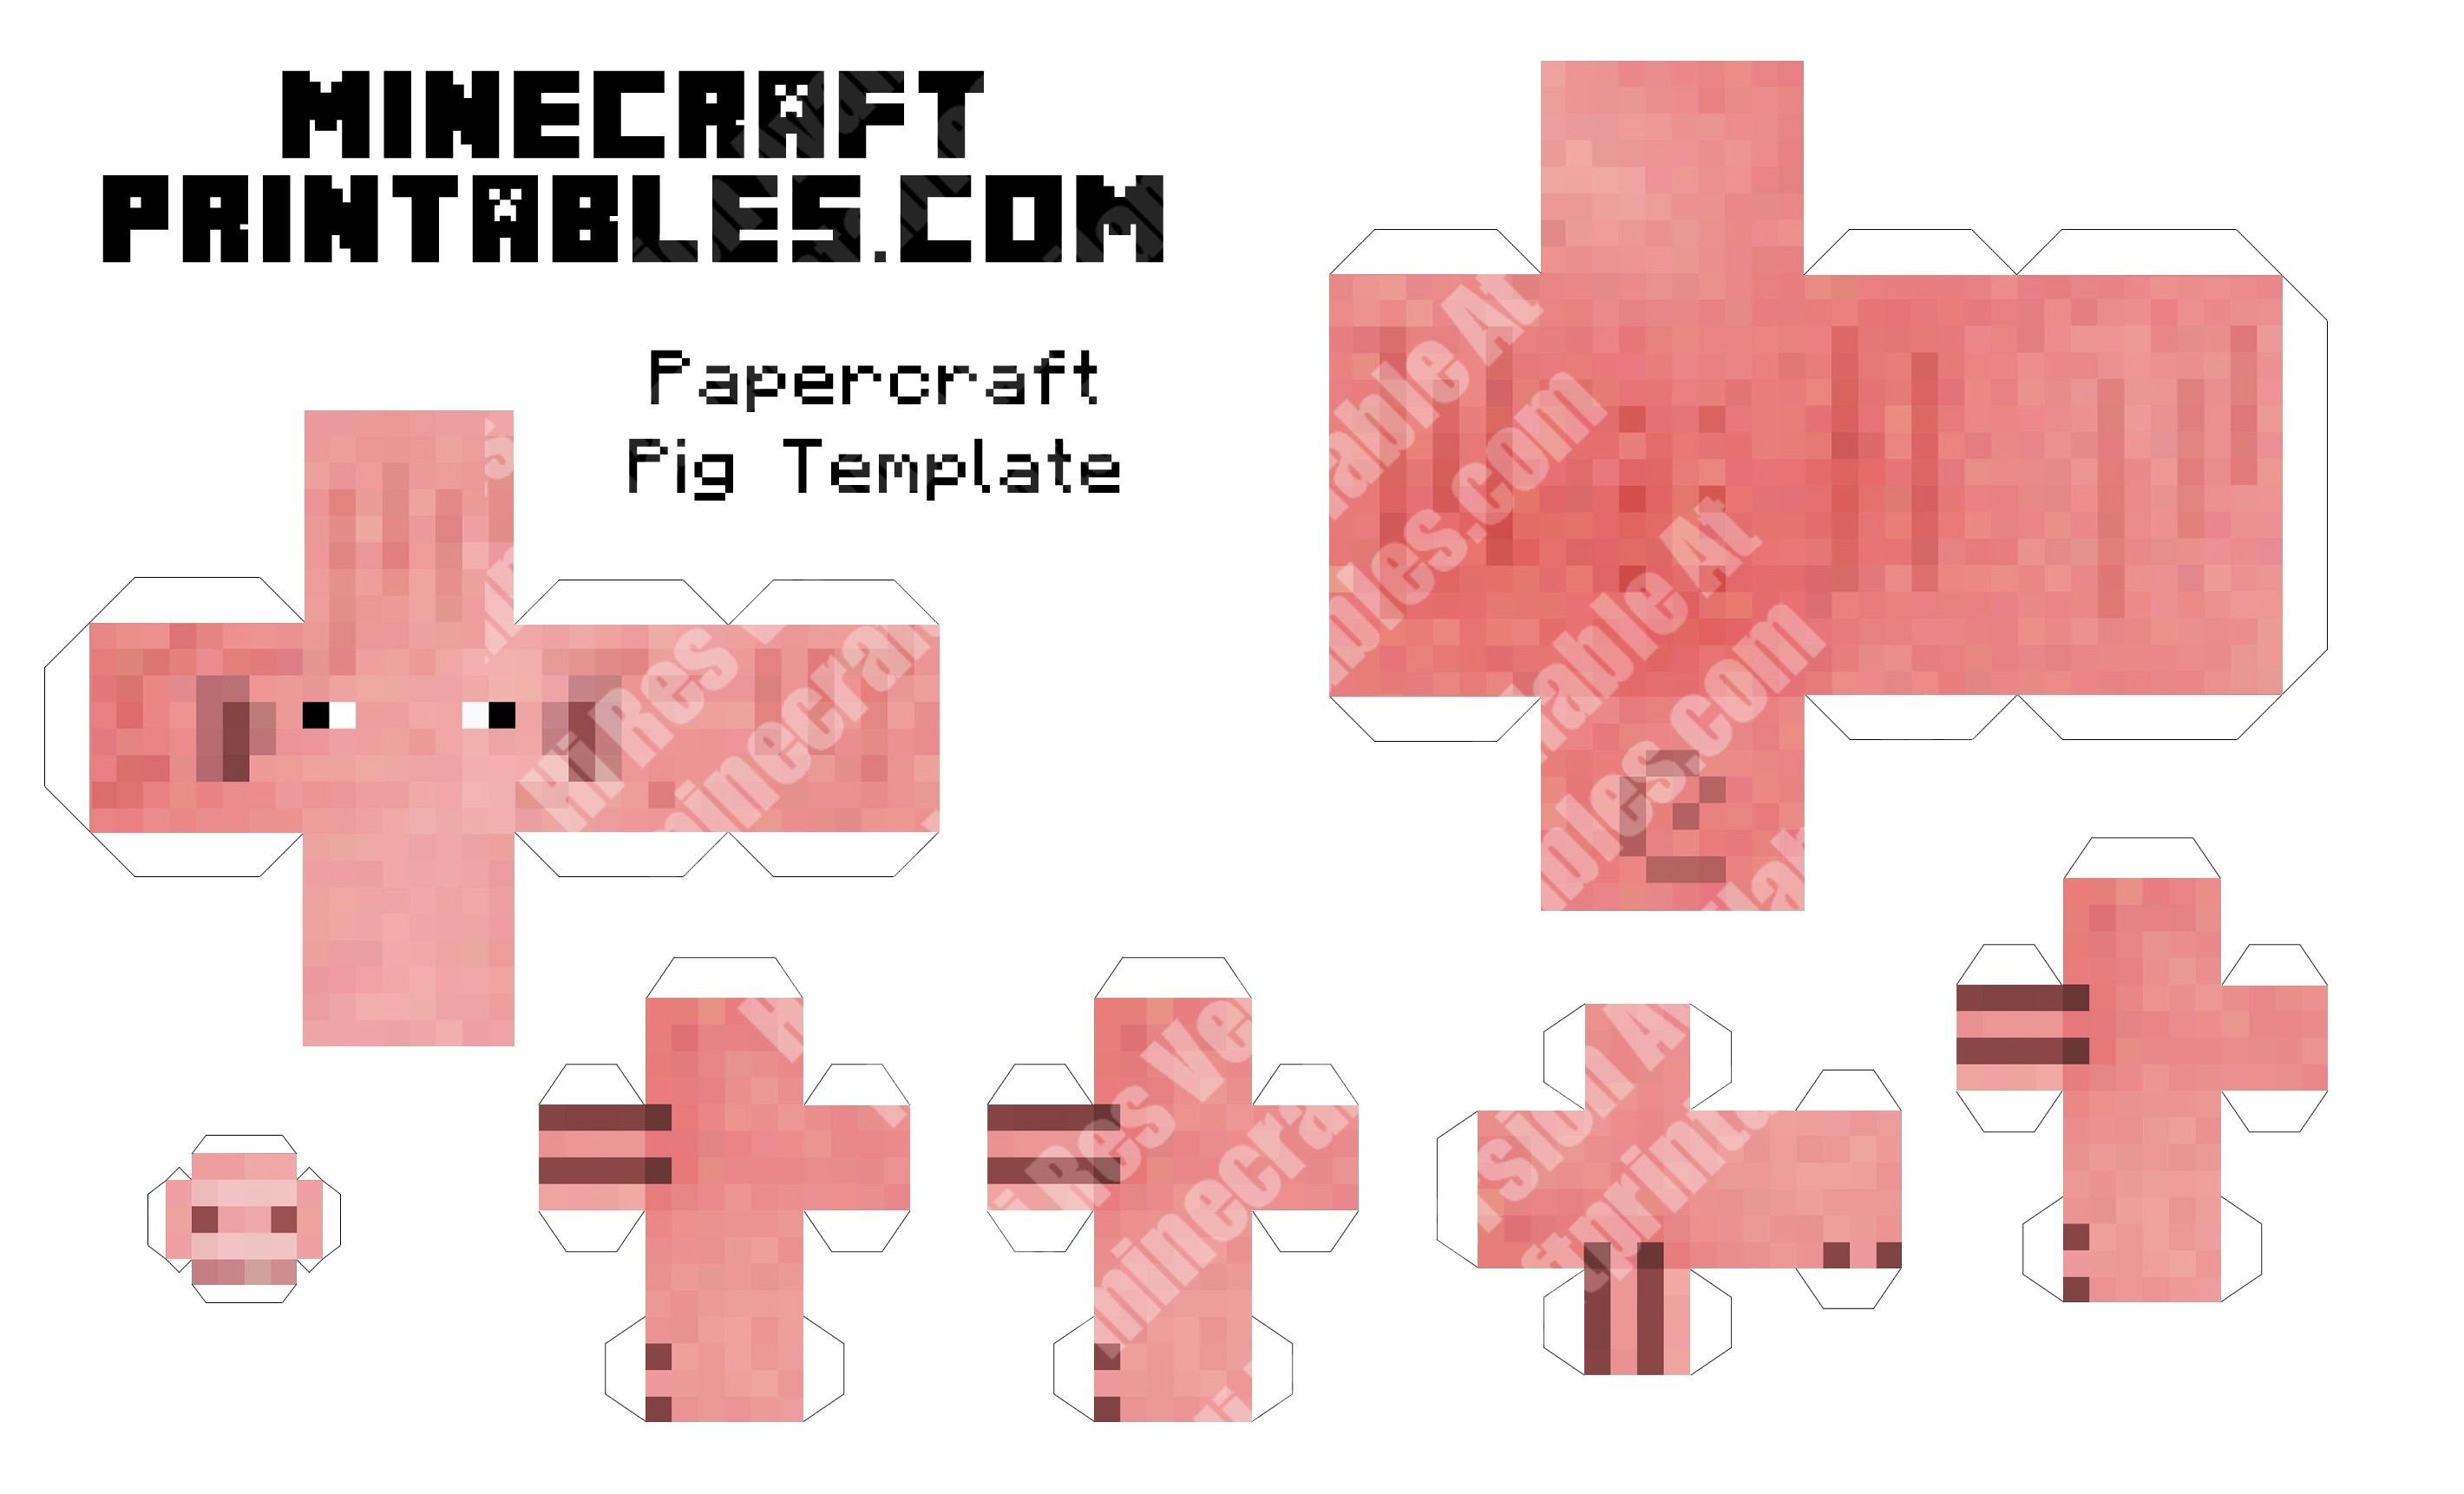 Pig Papercraft  minecraft Printable  Pig Template  printouts Minecraft papercraft